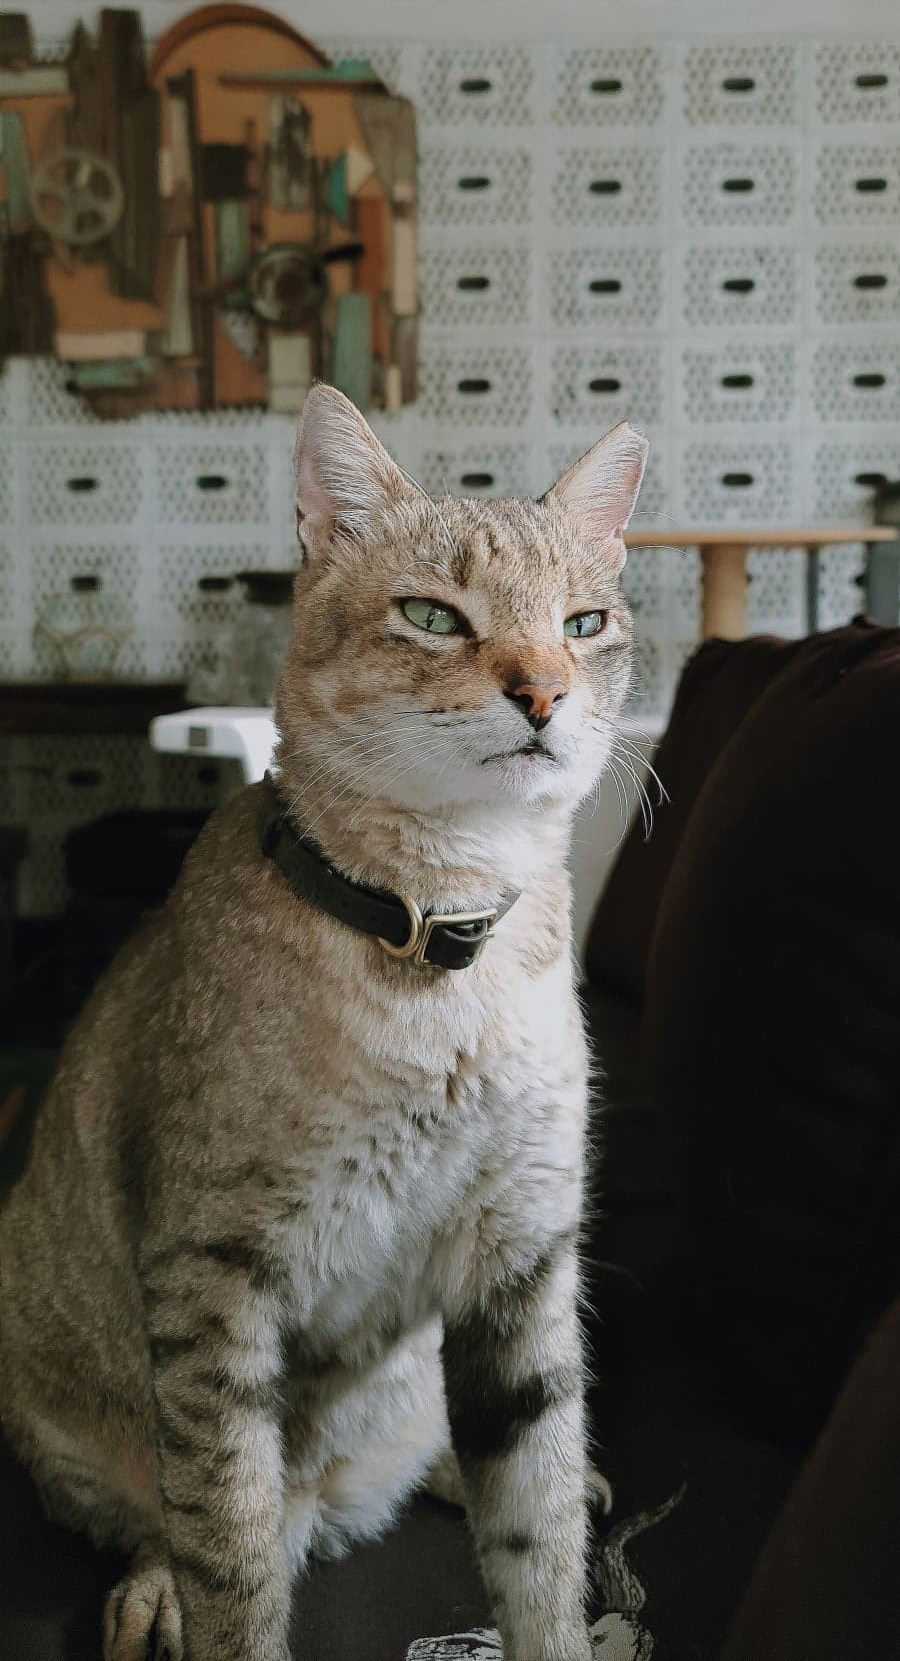 Mobile Photography Share Jason Magbanua featuring his beloved cat Nas Catbanua